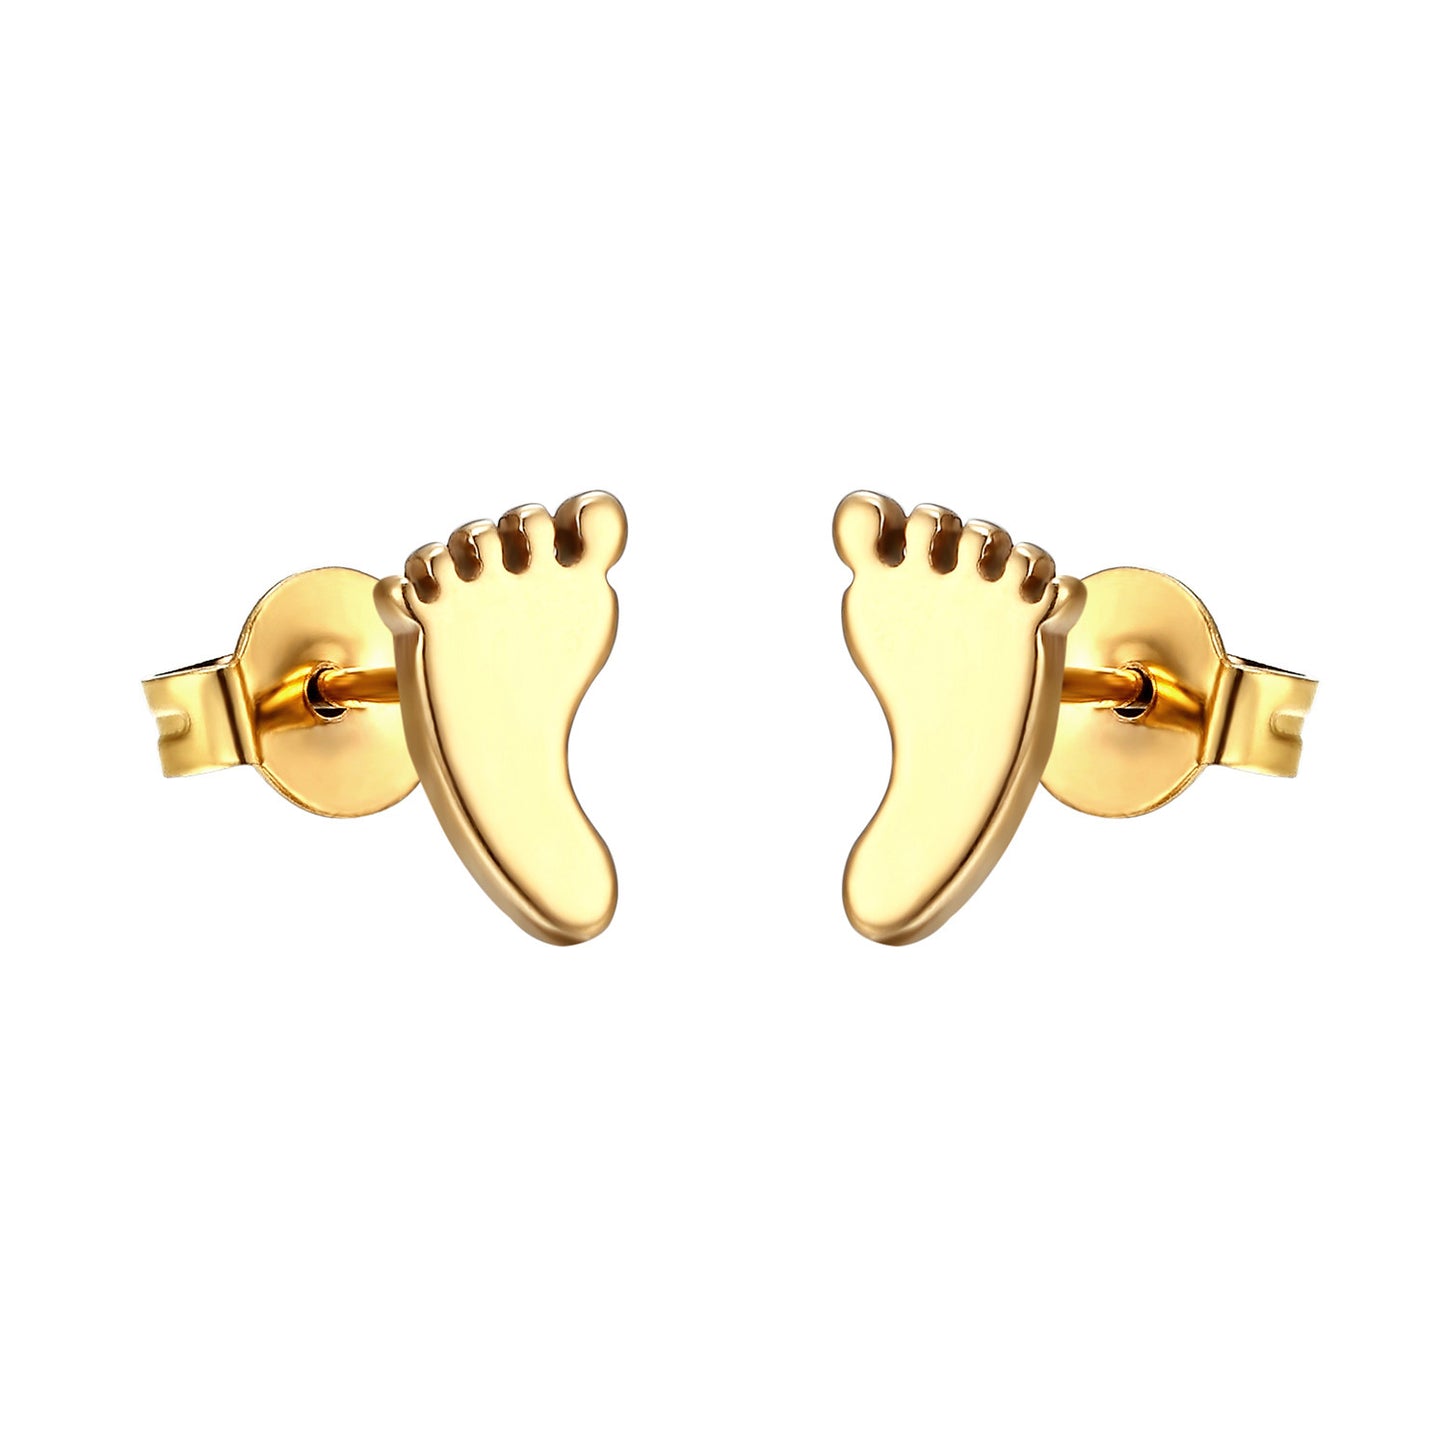 14k Gold Tone Foot Print Earrings Stainless Steel Studs 9mm